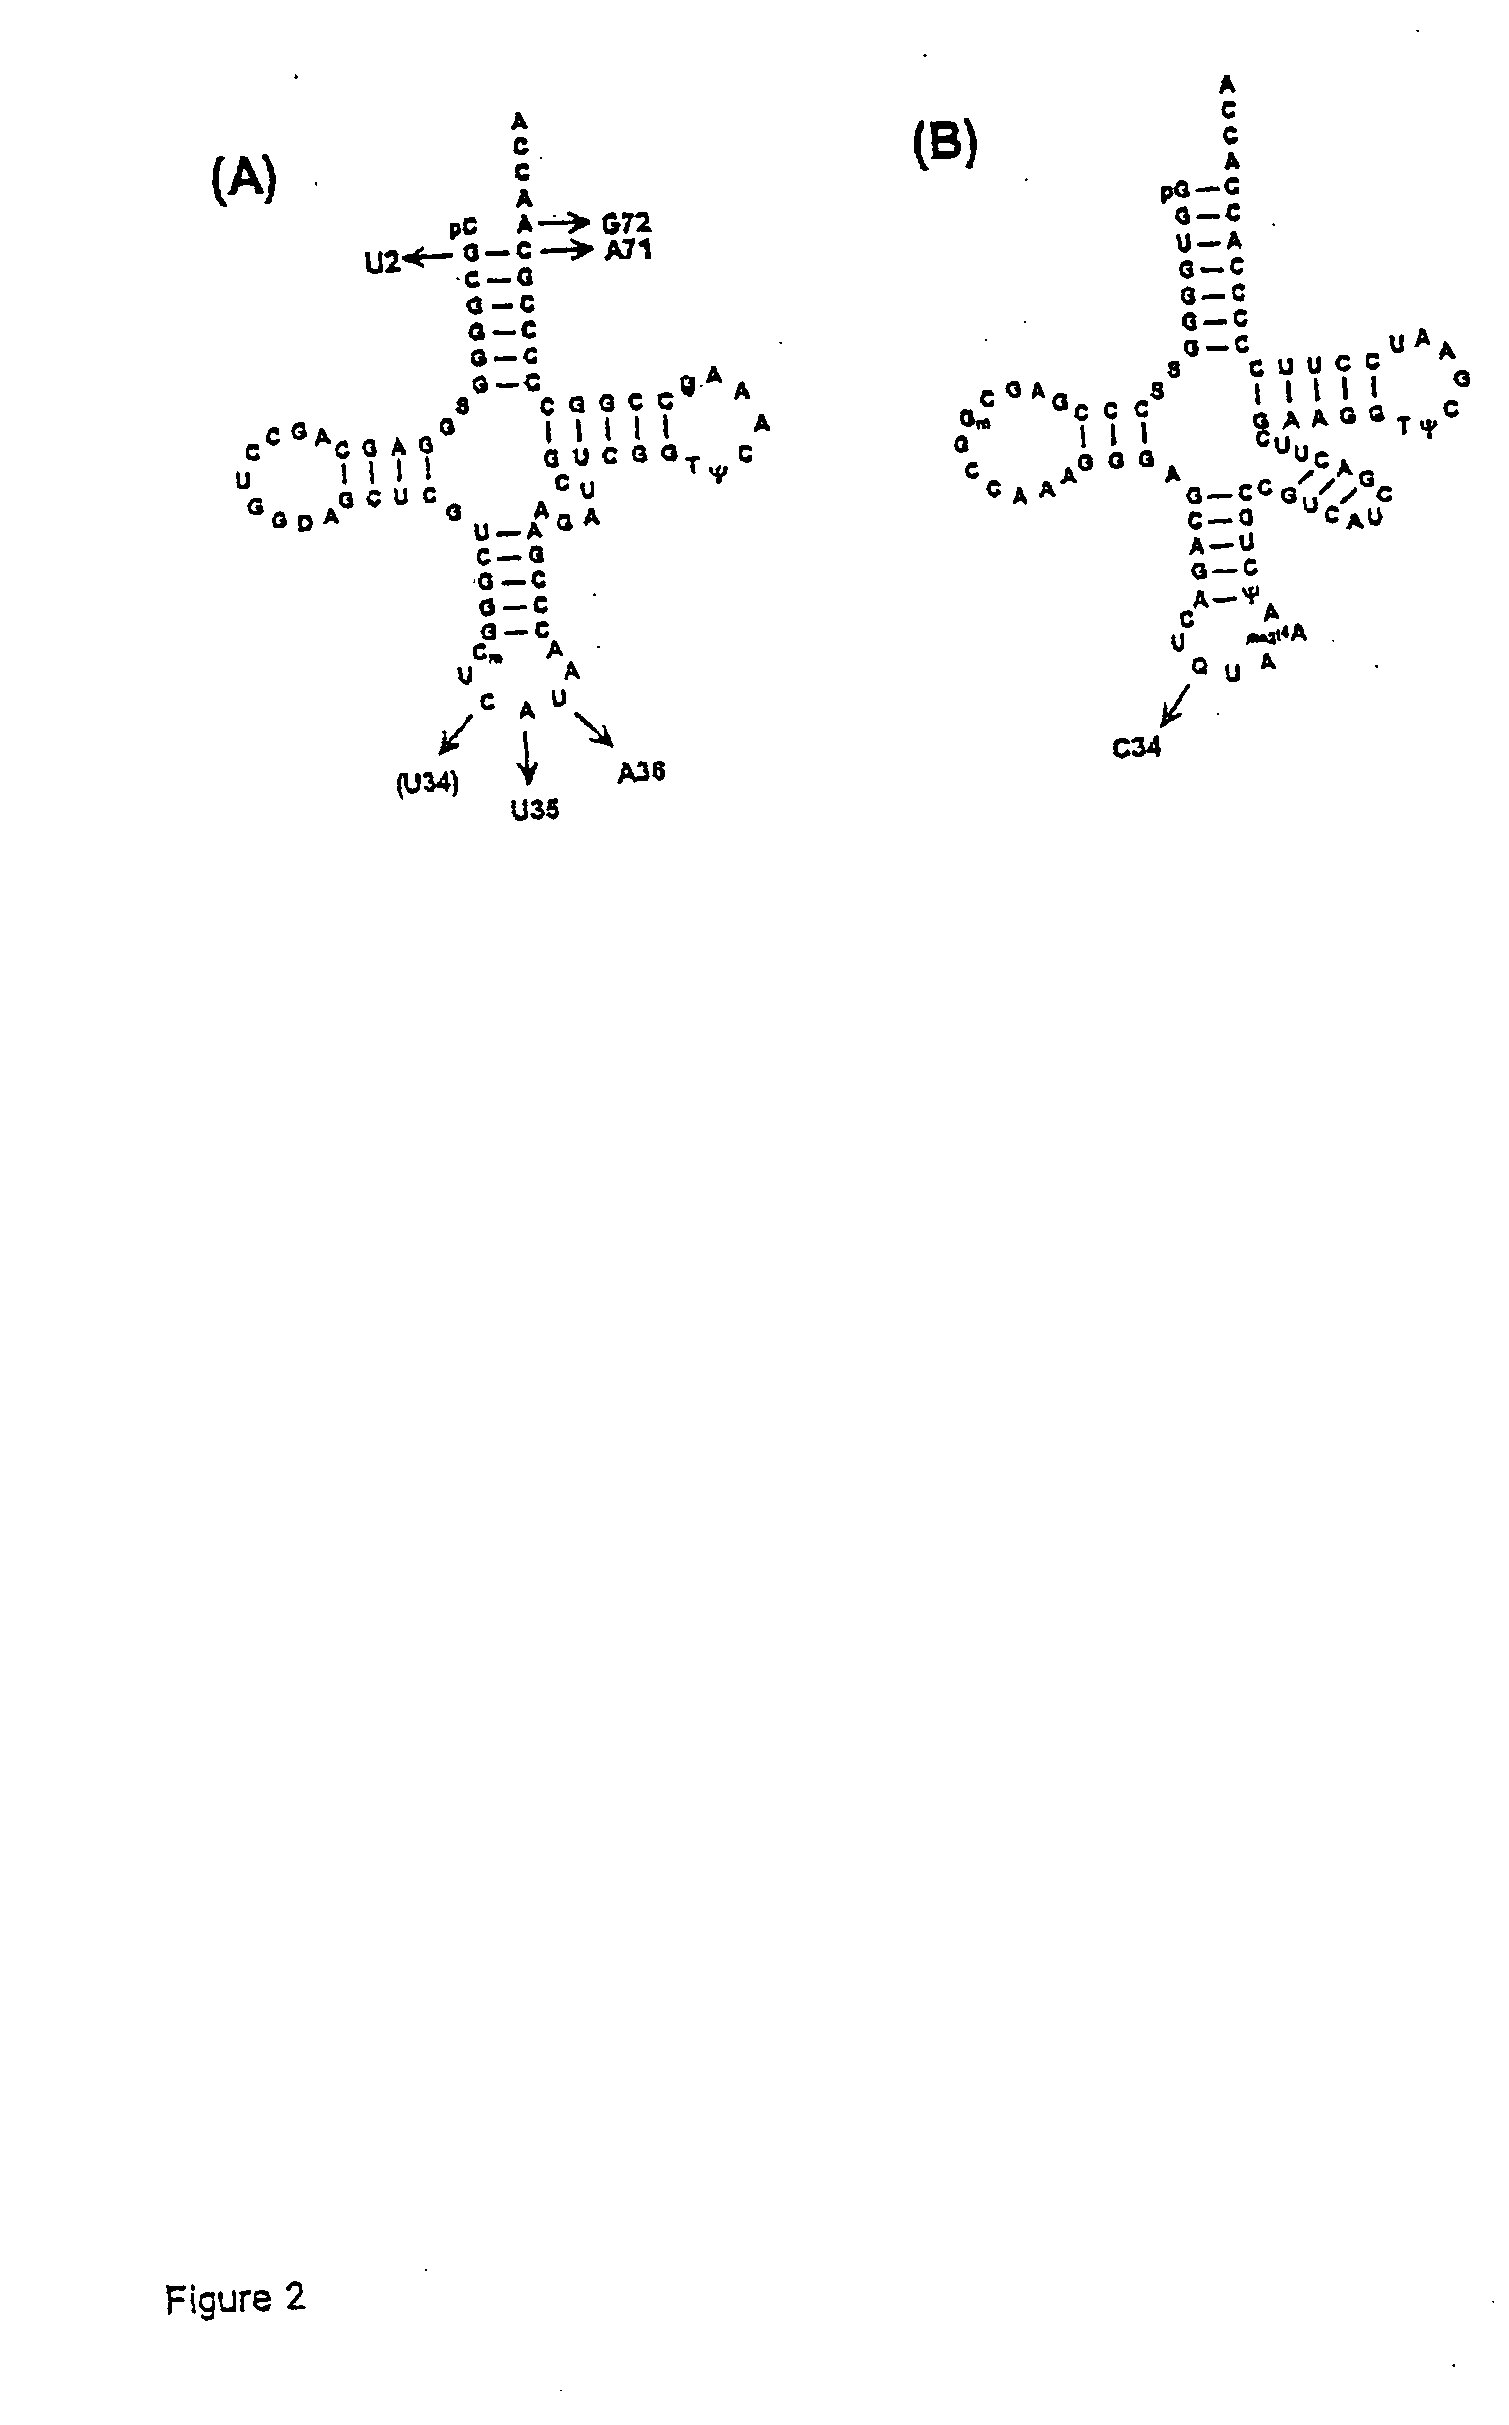 Orthogonal suppressor tRNAs and aminoacyl-tRNA synthetases and uses thereof